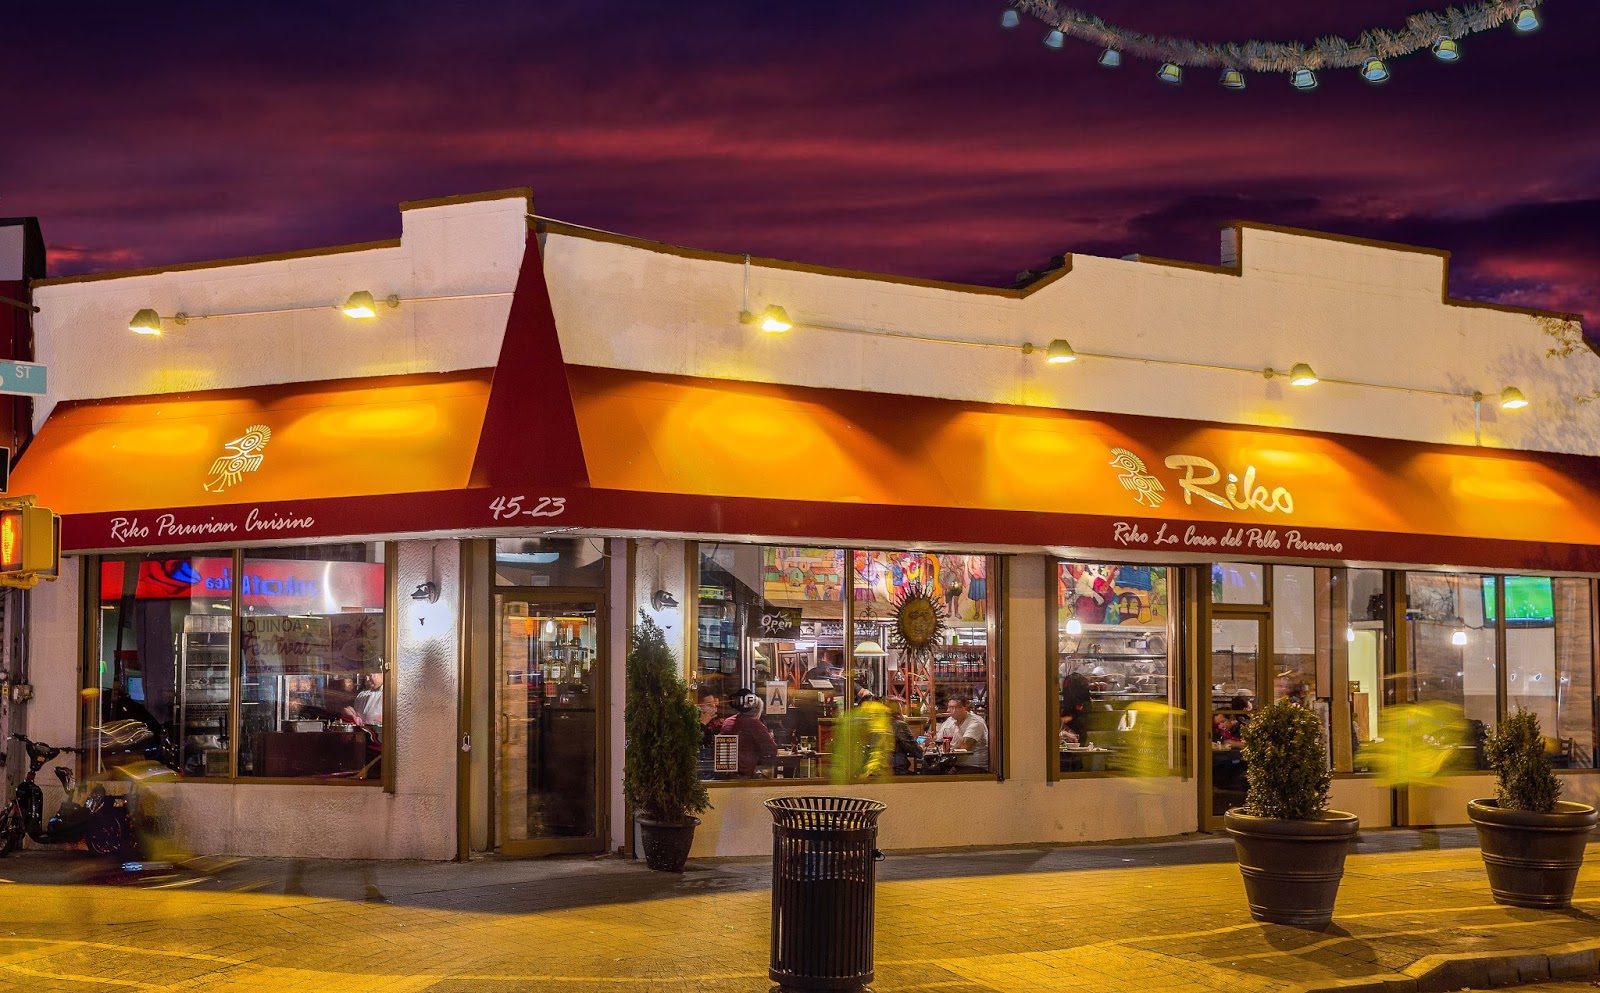 Photo of Riko Peruvian Cuisine Sunnyside in sunnyside City, New York, United States - 4 Picture of Restaurant, Food, Point of interest, Establishment